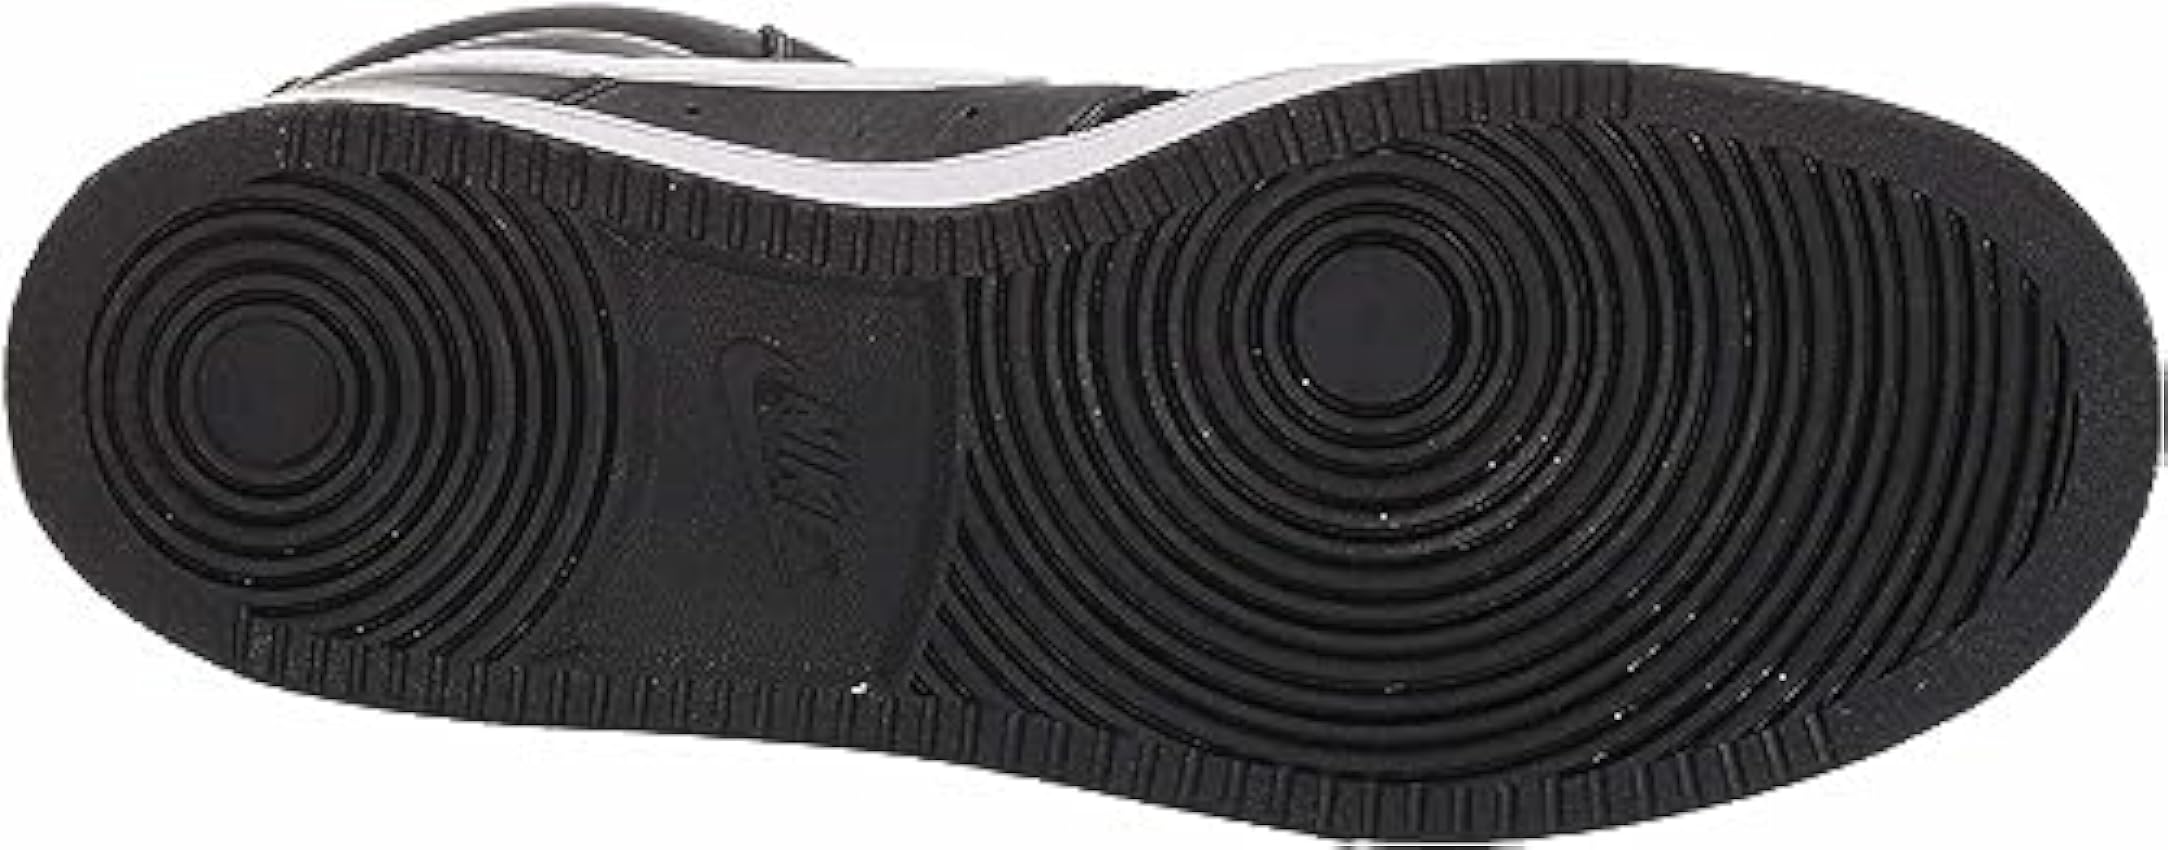 Nike Femme WMNS Court Vision Mid Chaussures Montantes 3 Quarts OvB1Aeu6